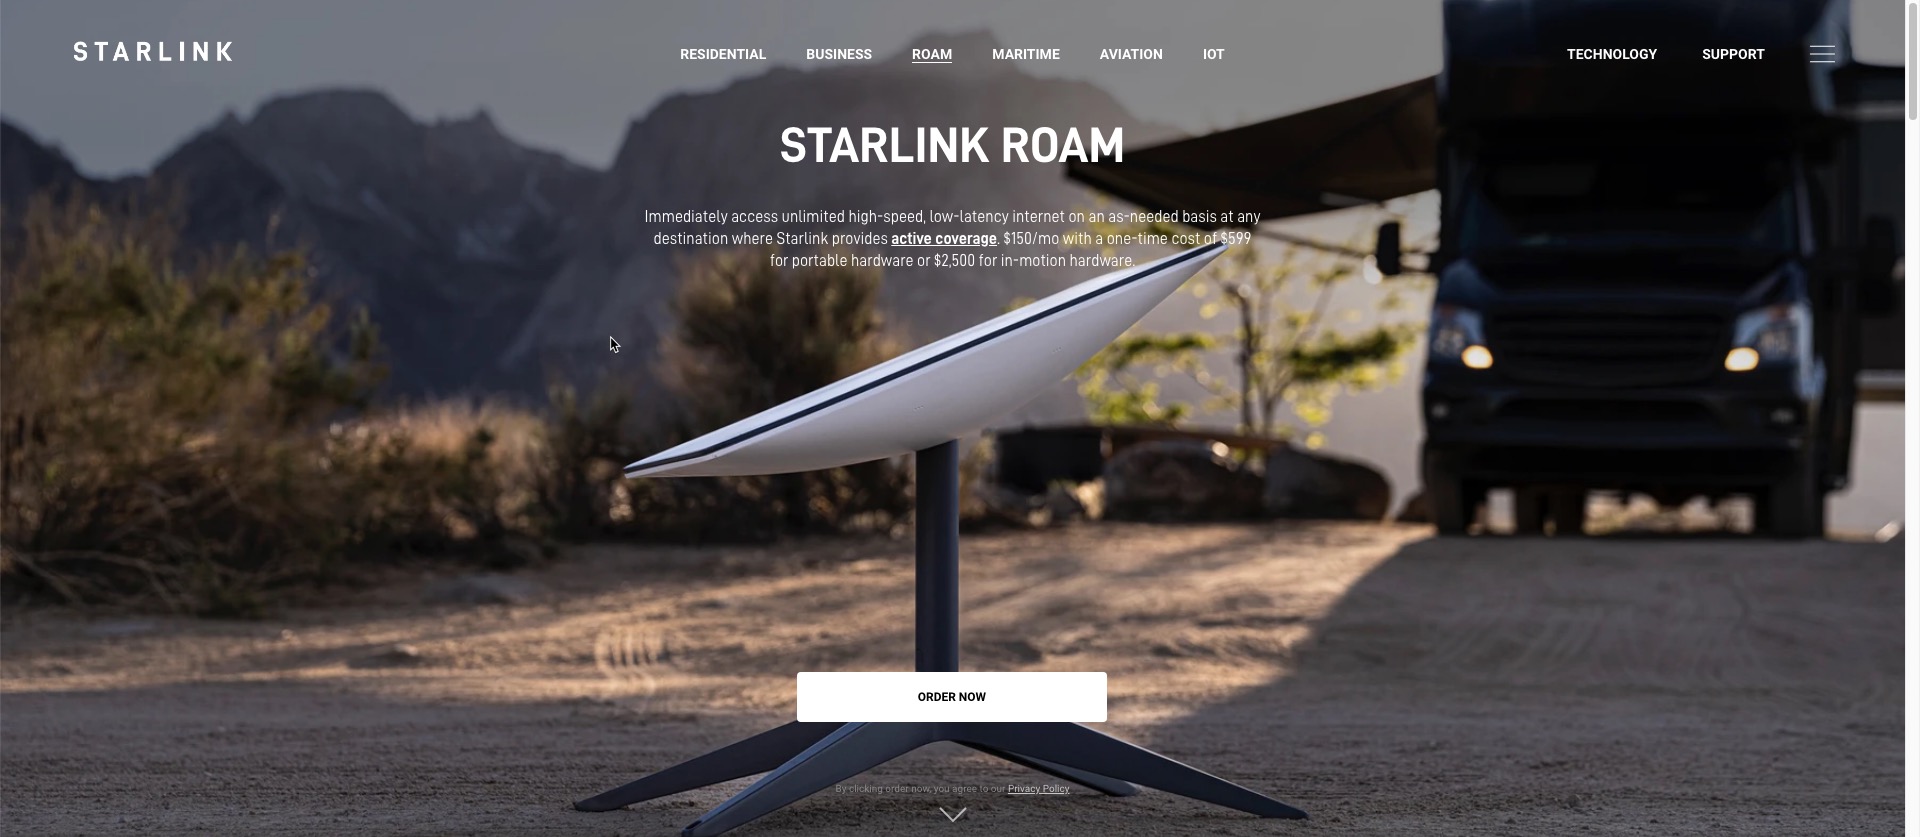 Starlink website with Roam options